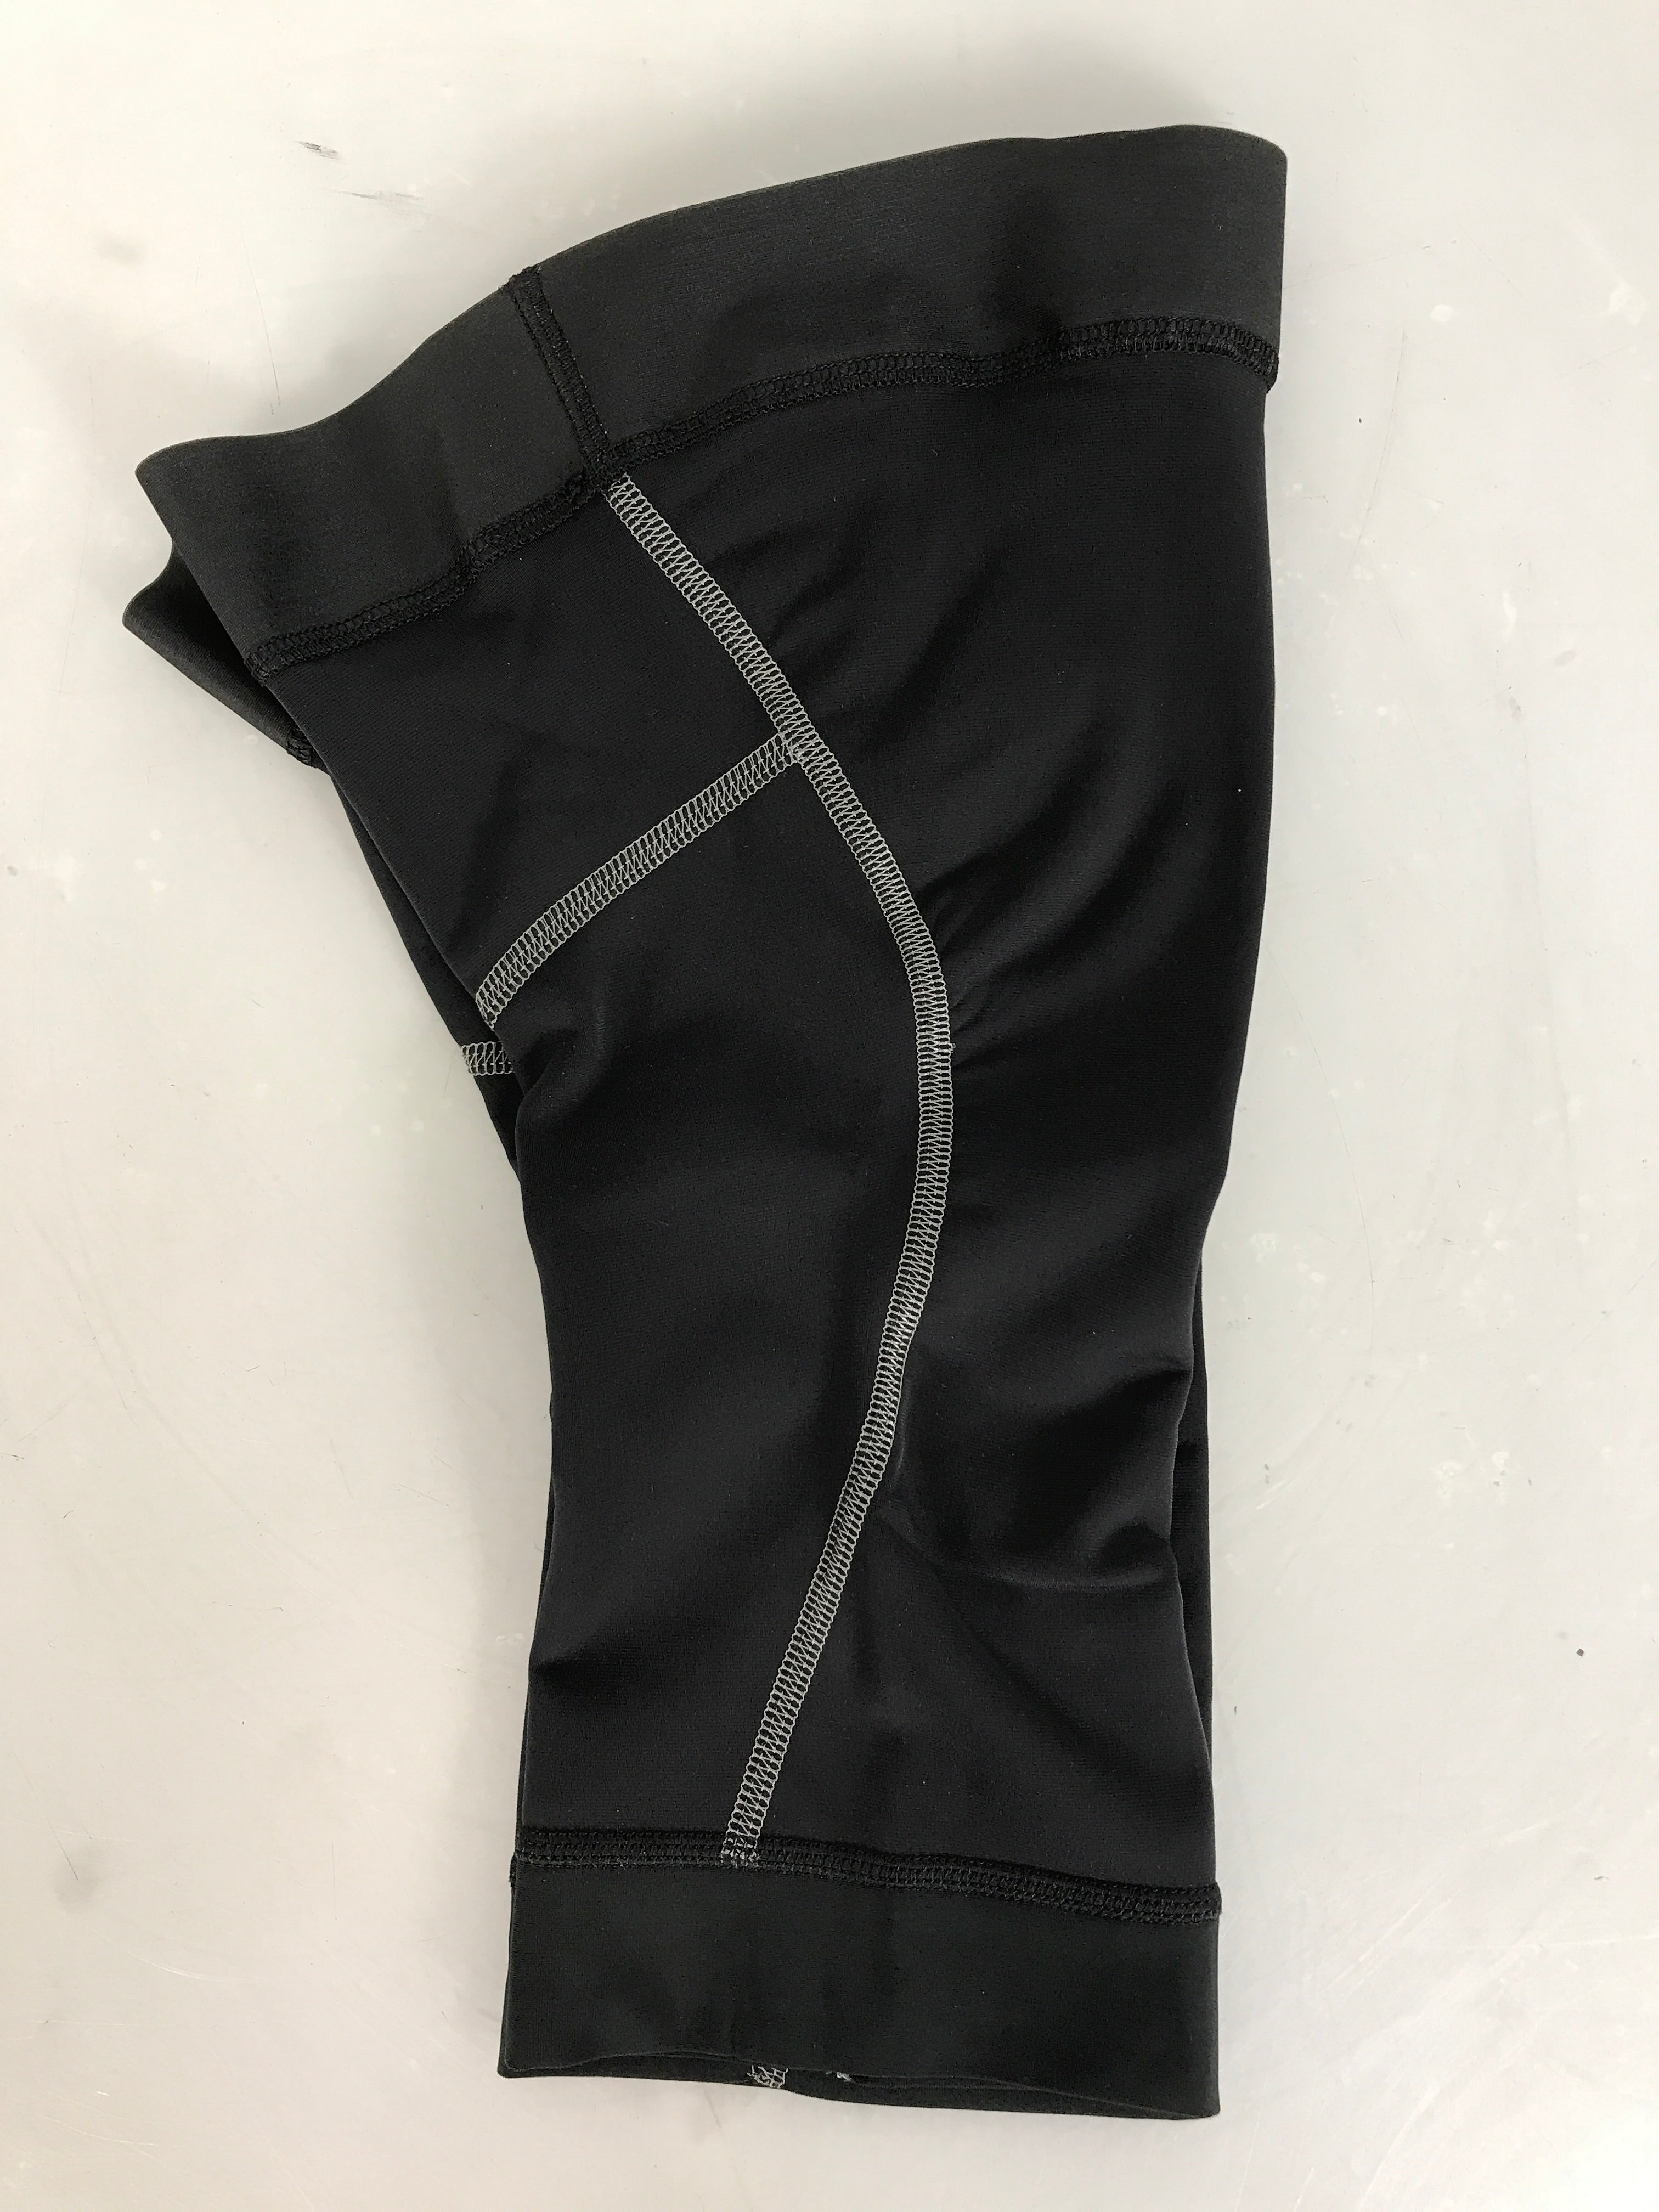 Specialized Therminal EX Black Knee Warmers Women's Size L NWT